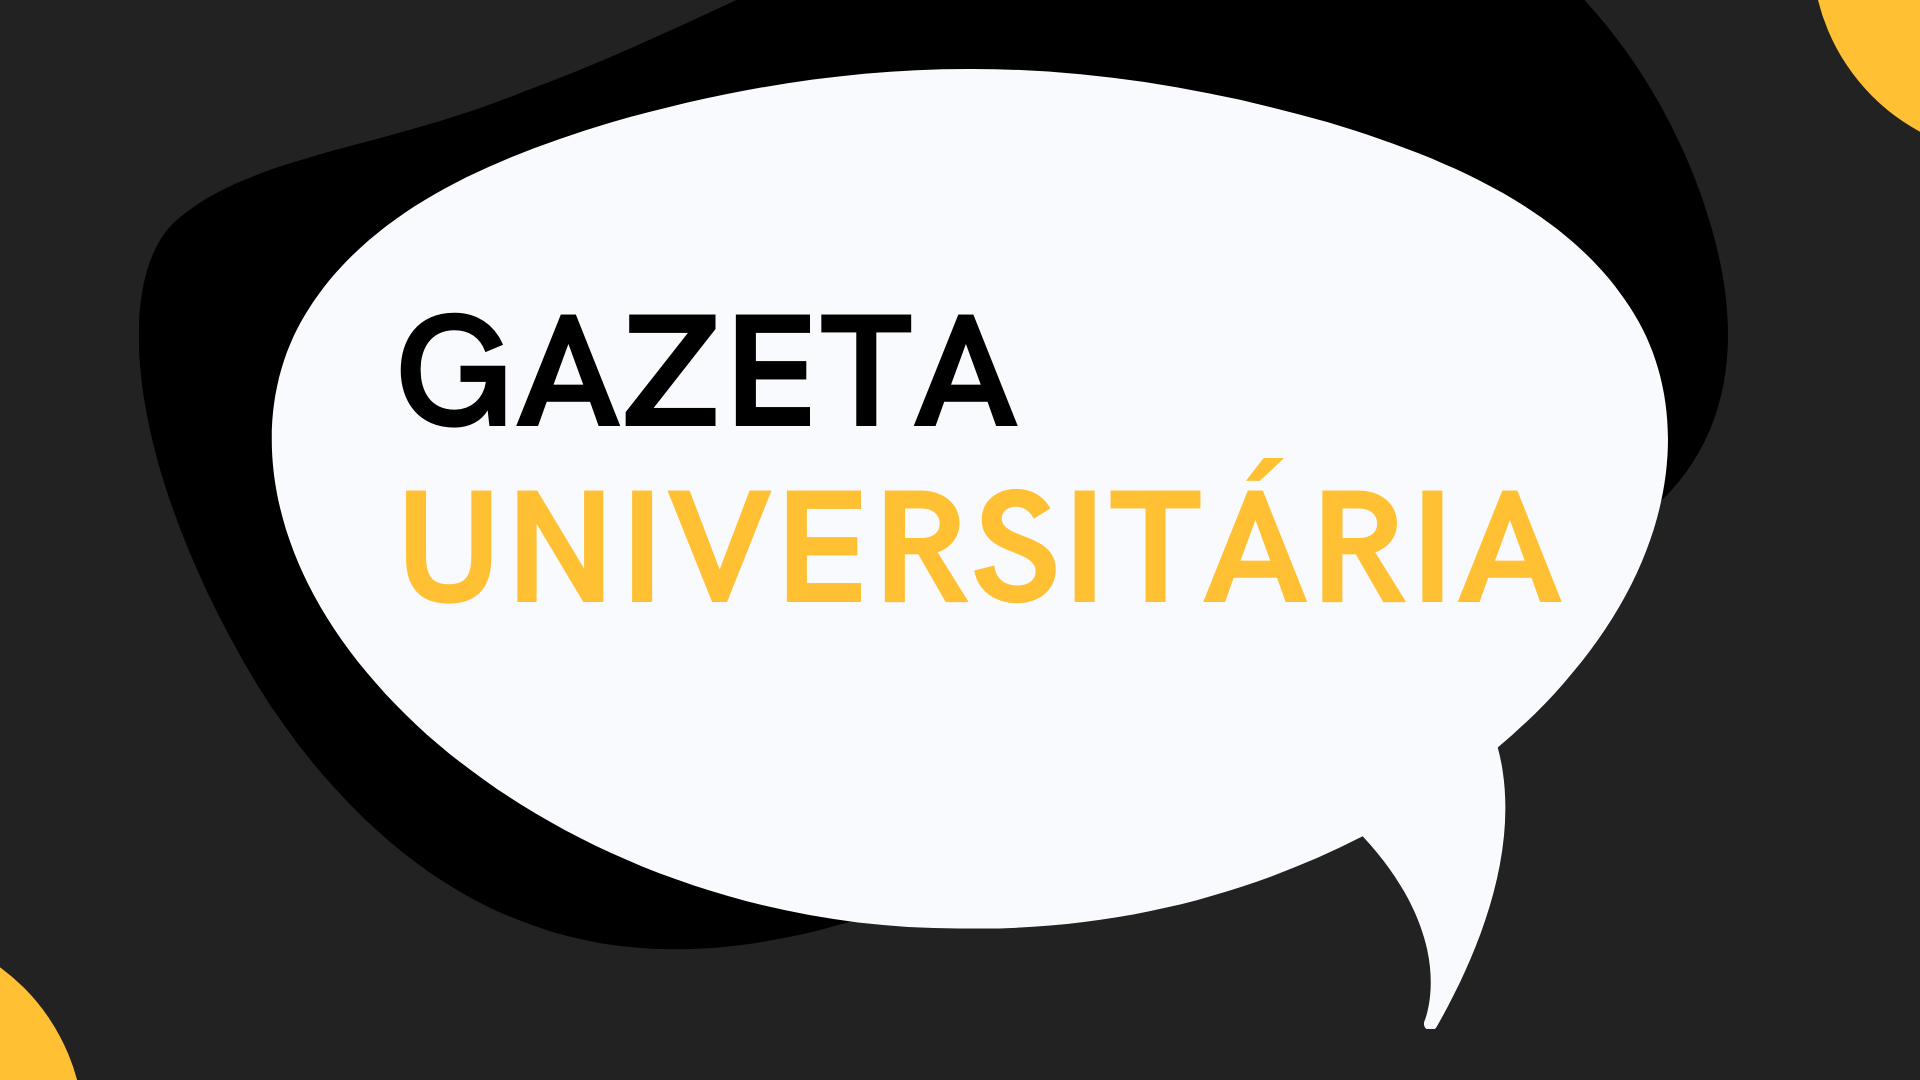 Gazeta Universitária - Projeto 2.0